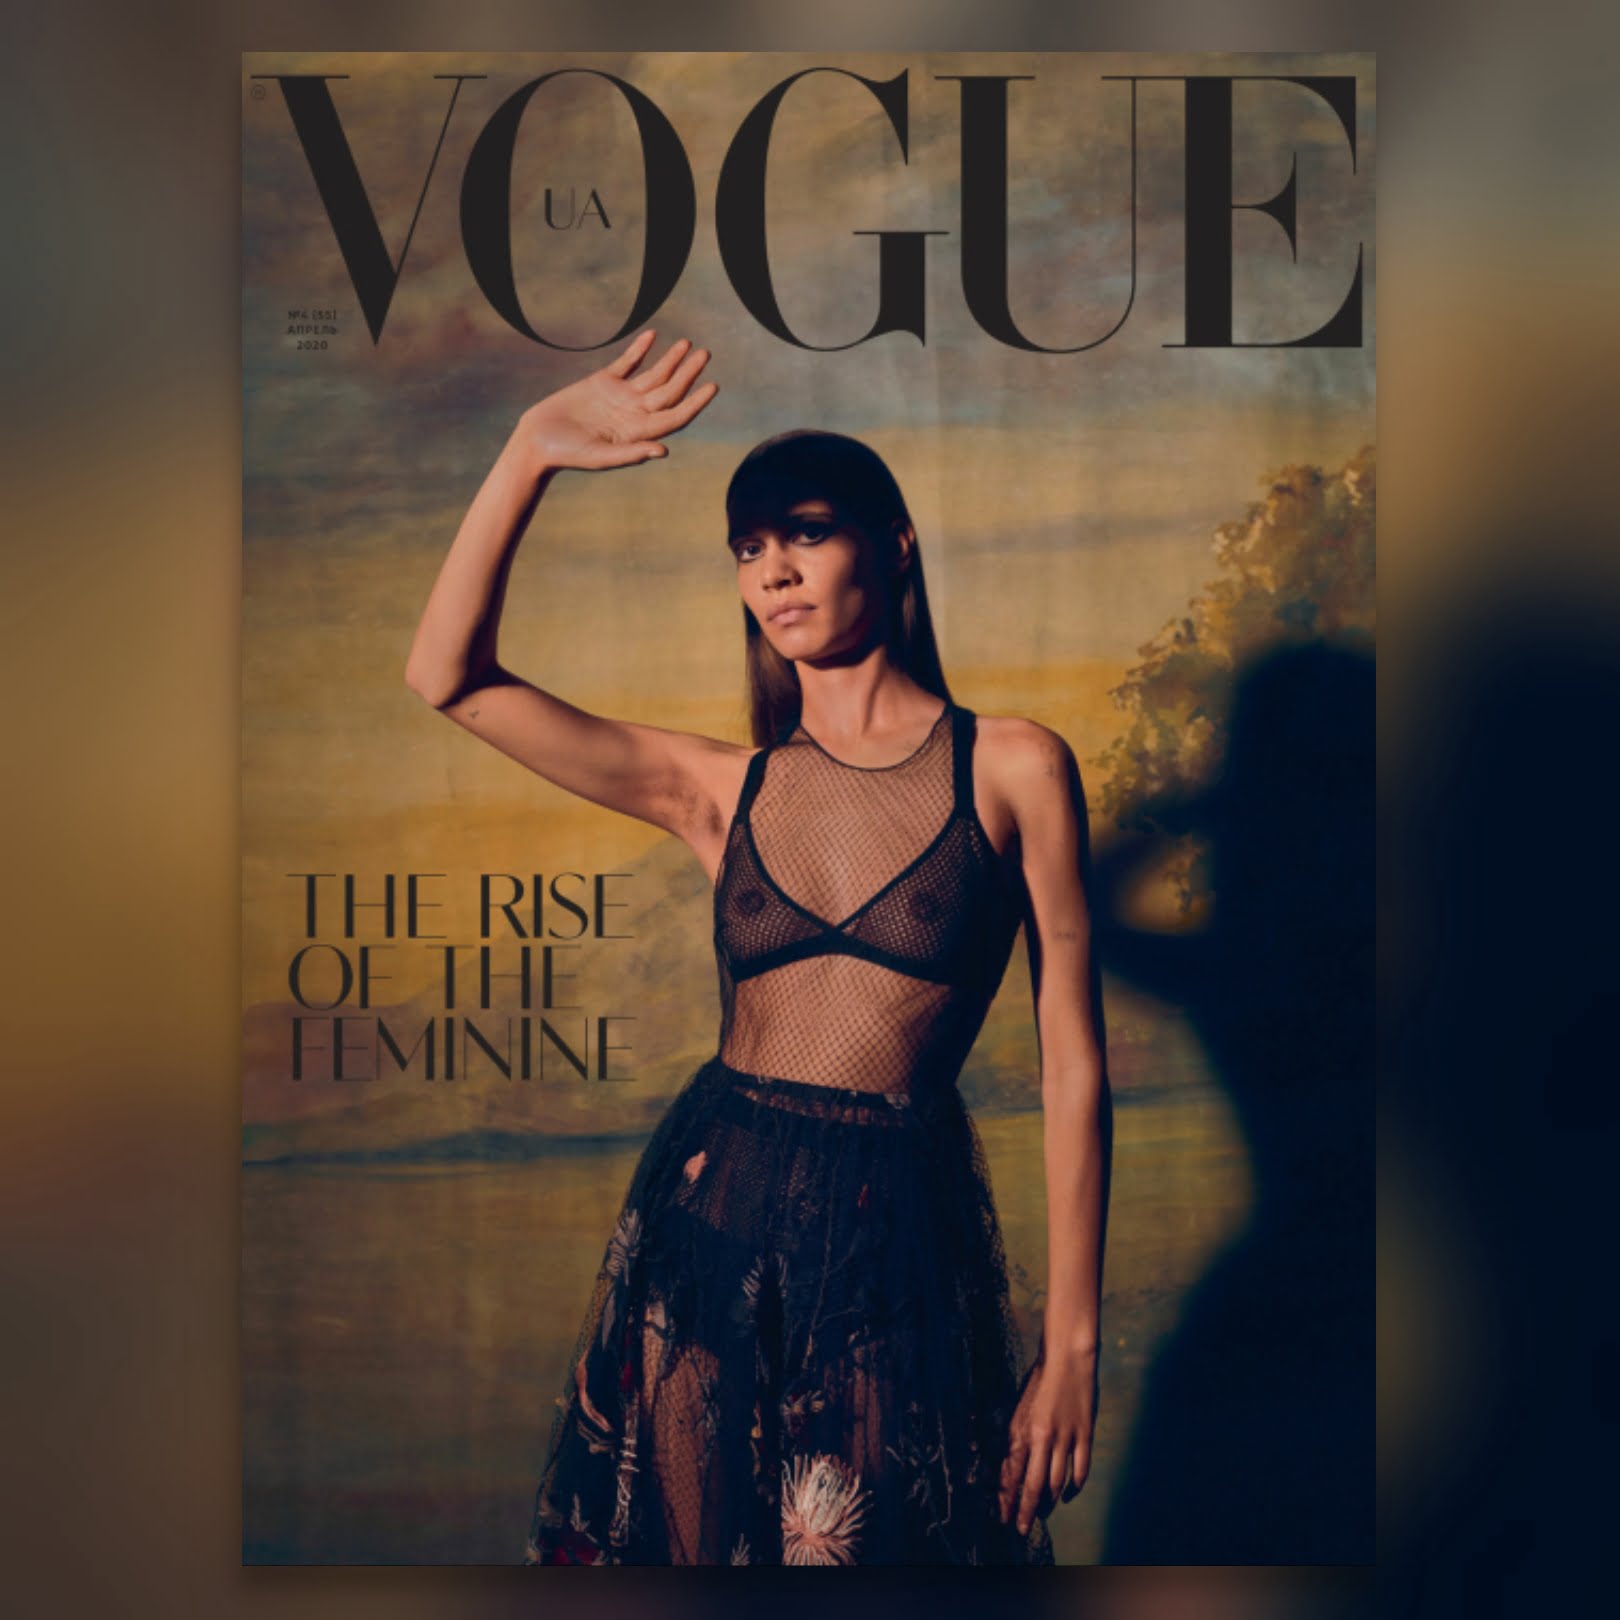 Vogue MAGAZINE UKRAINE, Ministry of Tomorrow, 360 MAGAZINE